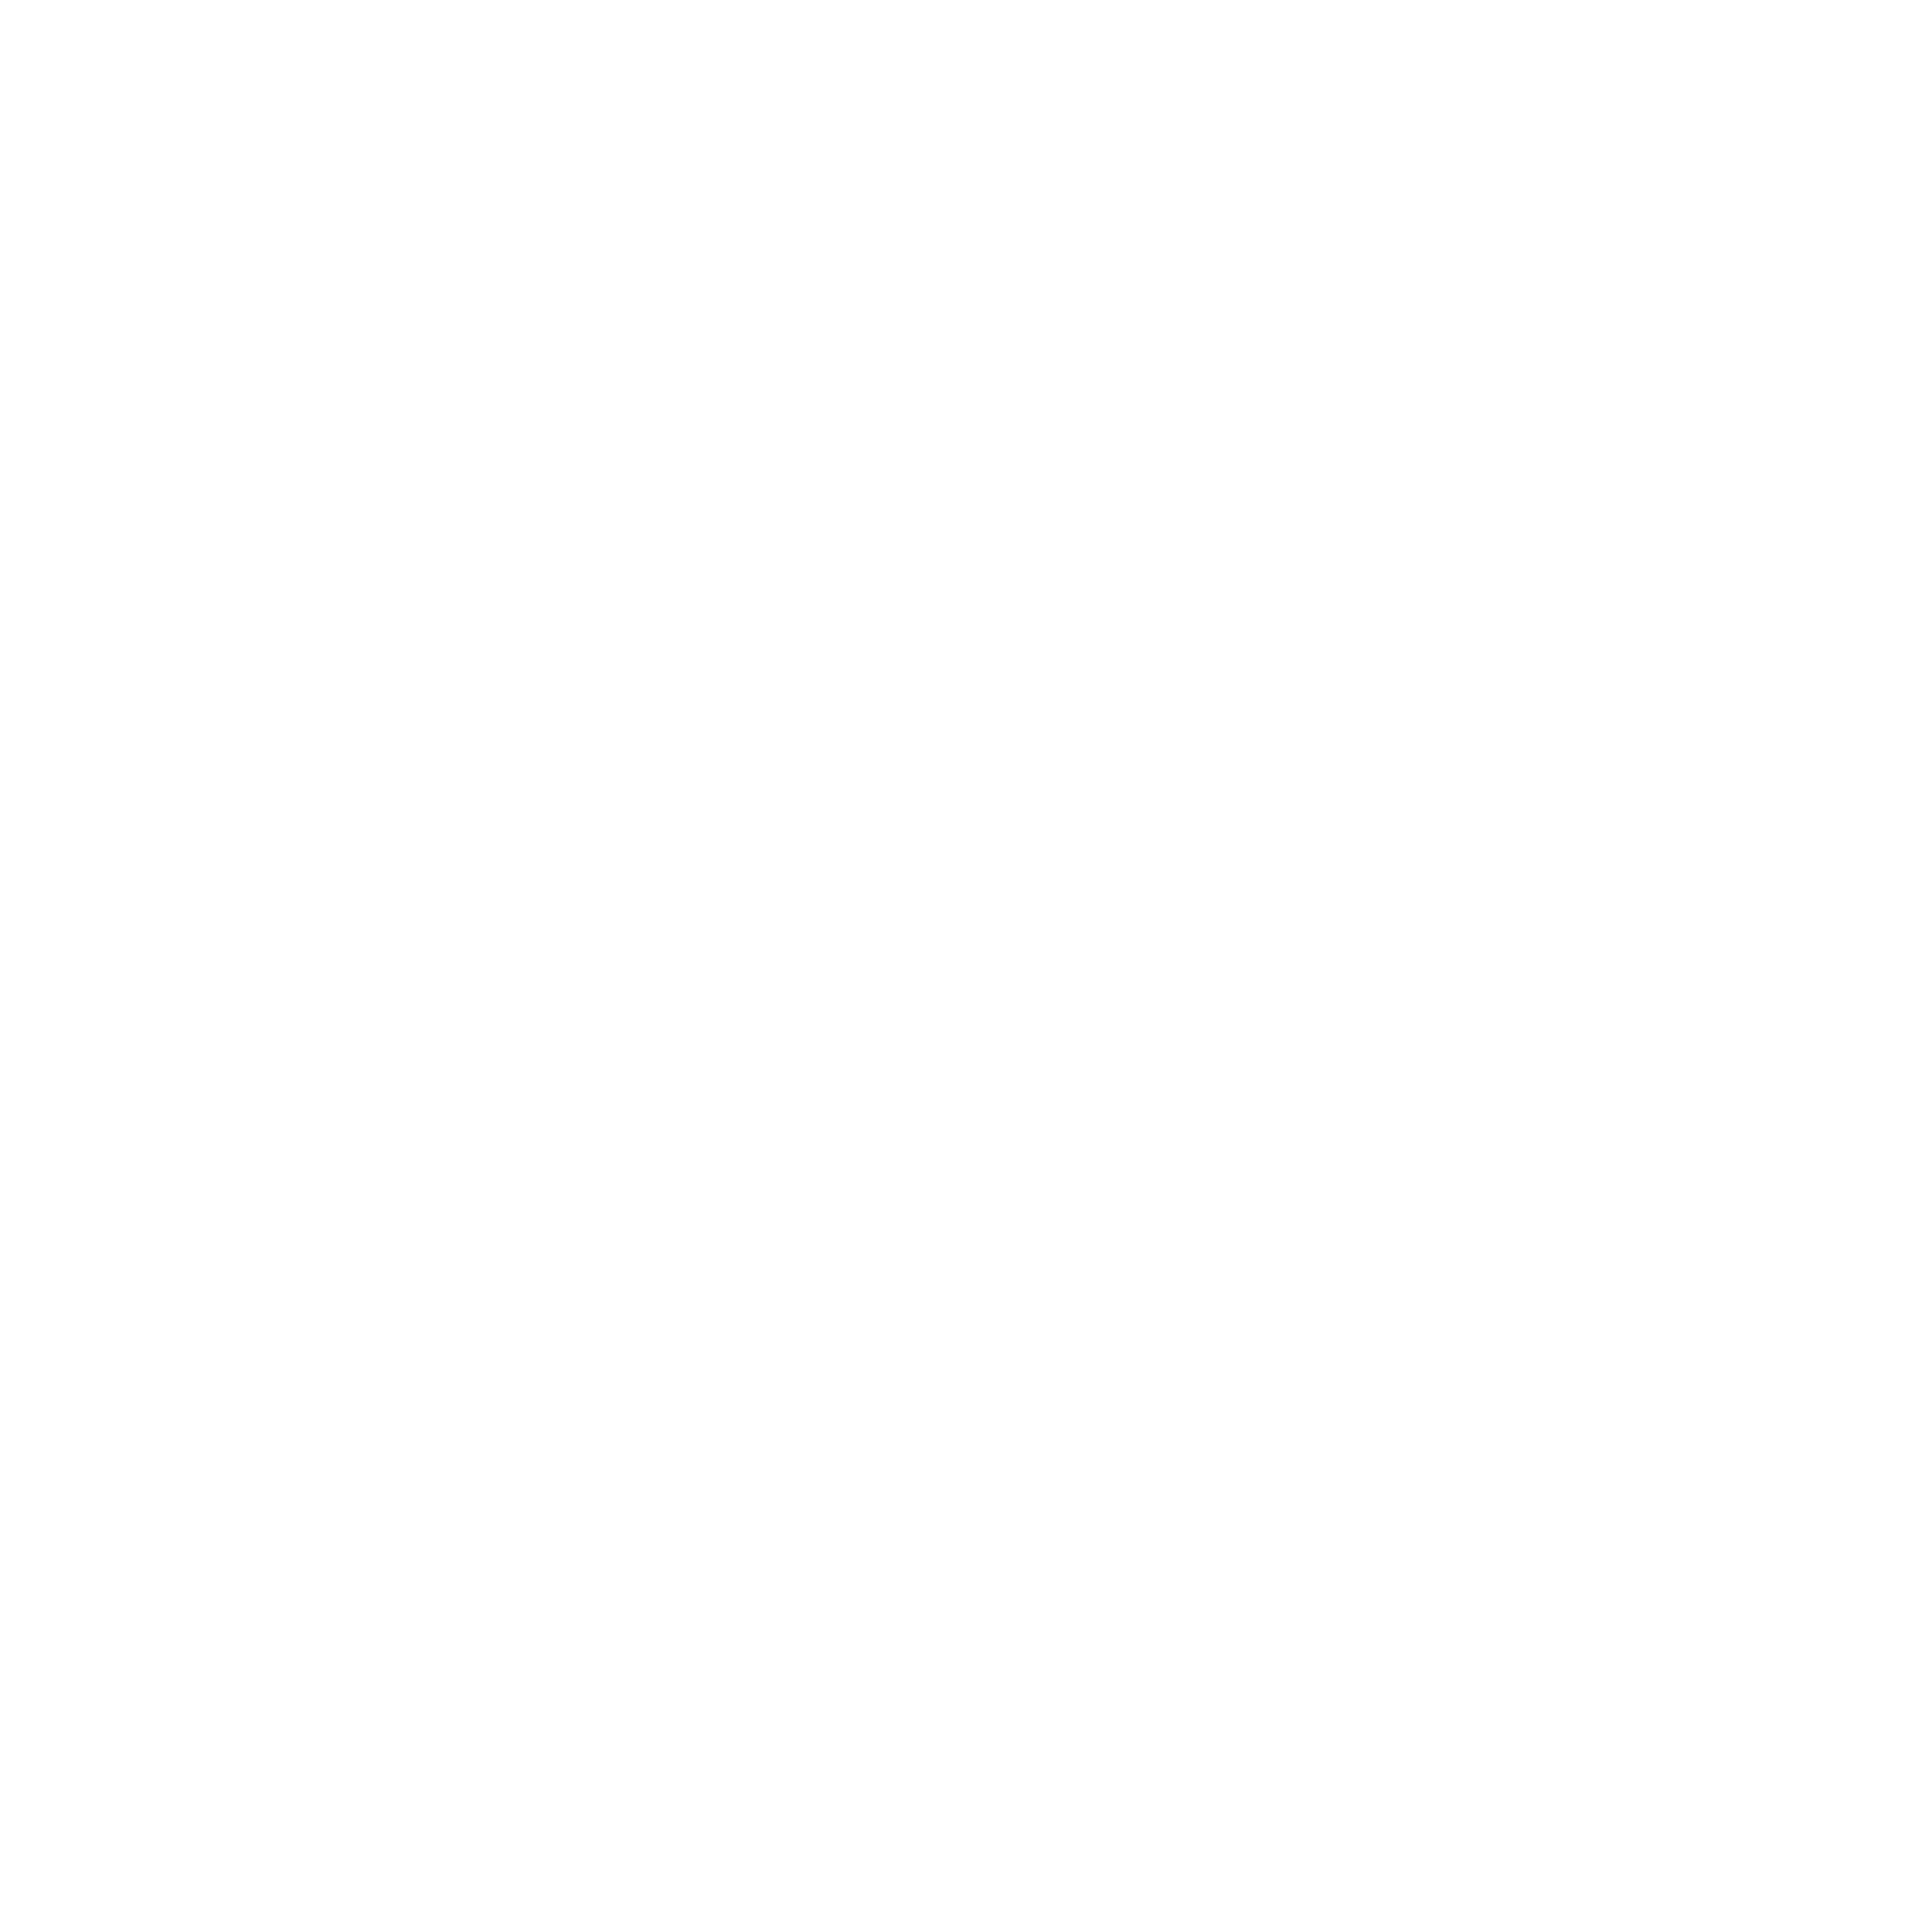 Lost Post